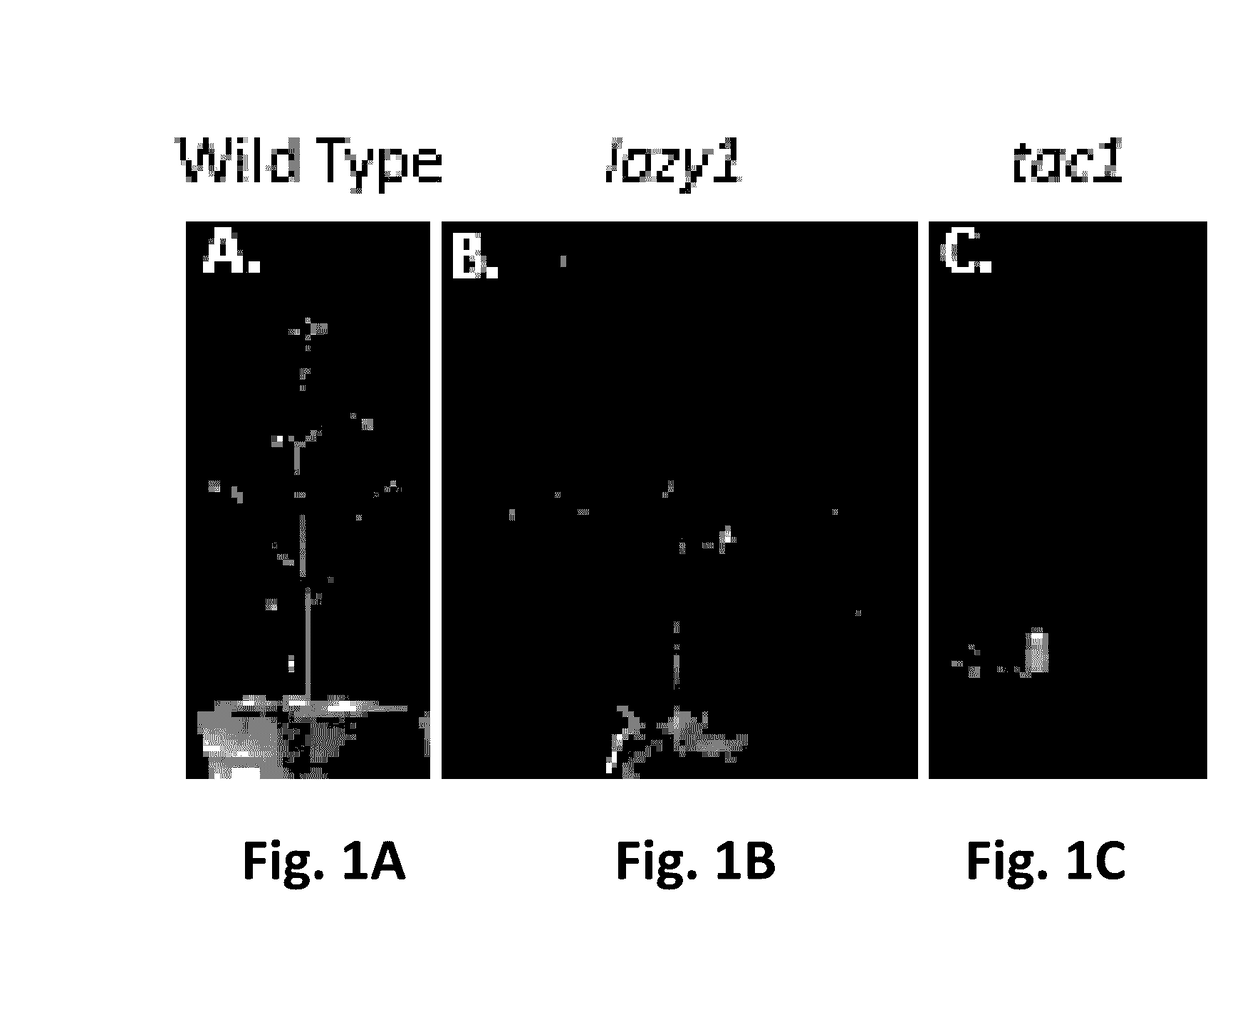 Functional Analysis of LAZY1 in Arabidopsis thaliana and Prunus Trees